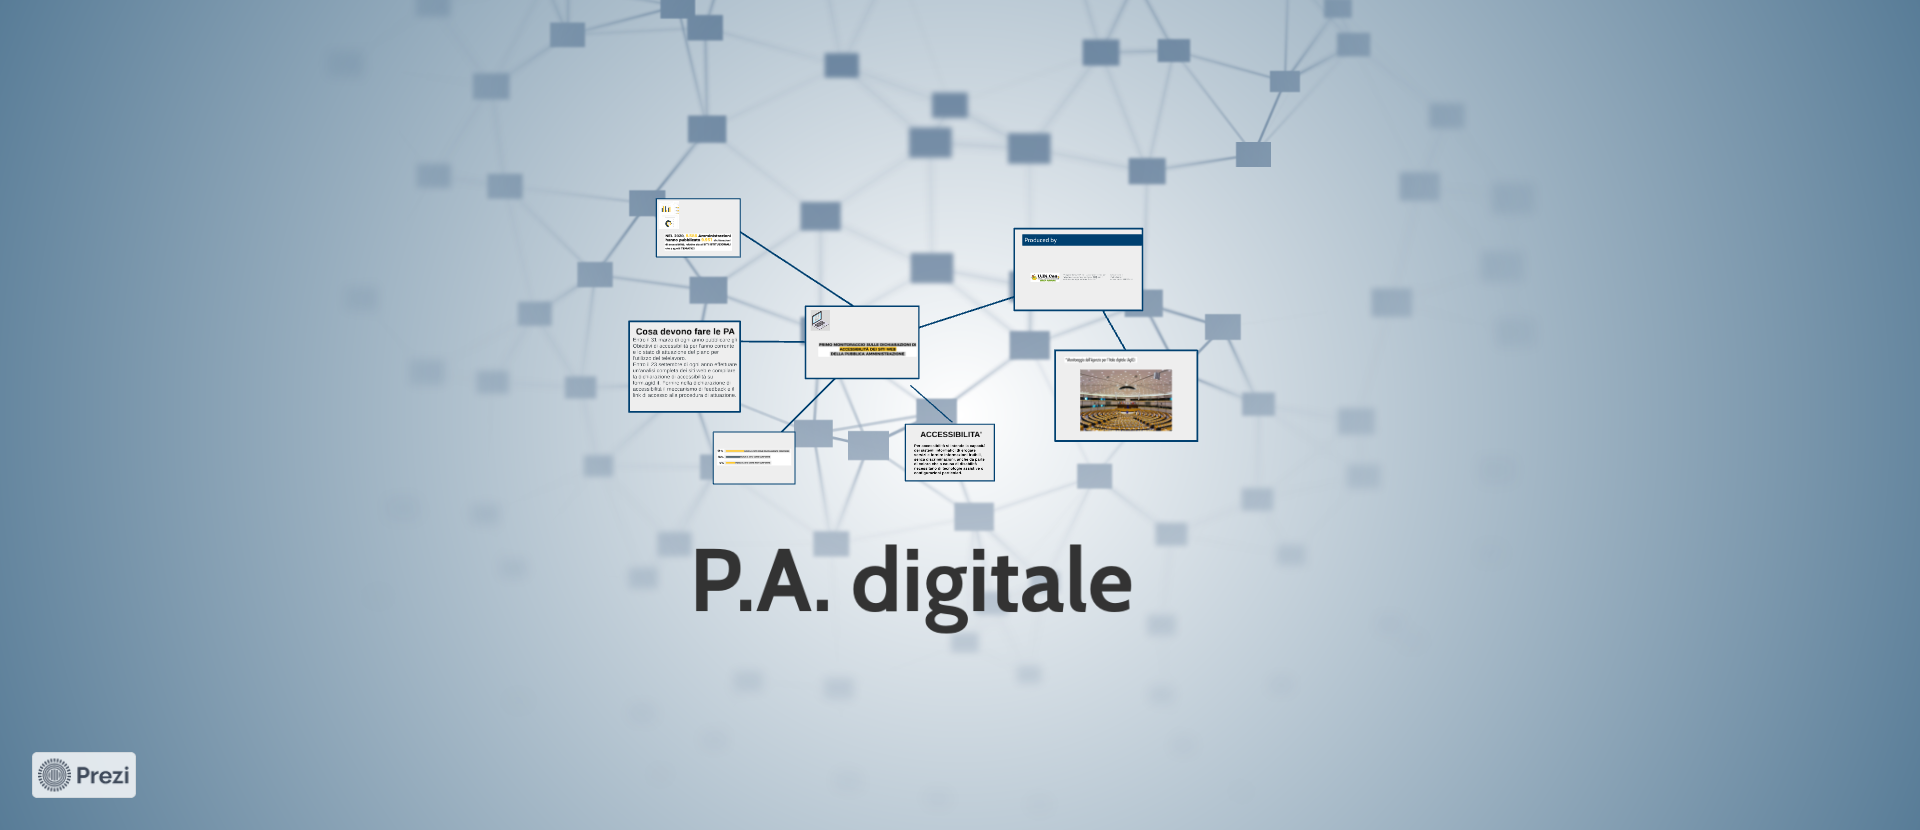 P.A. digitale